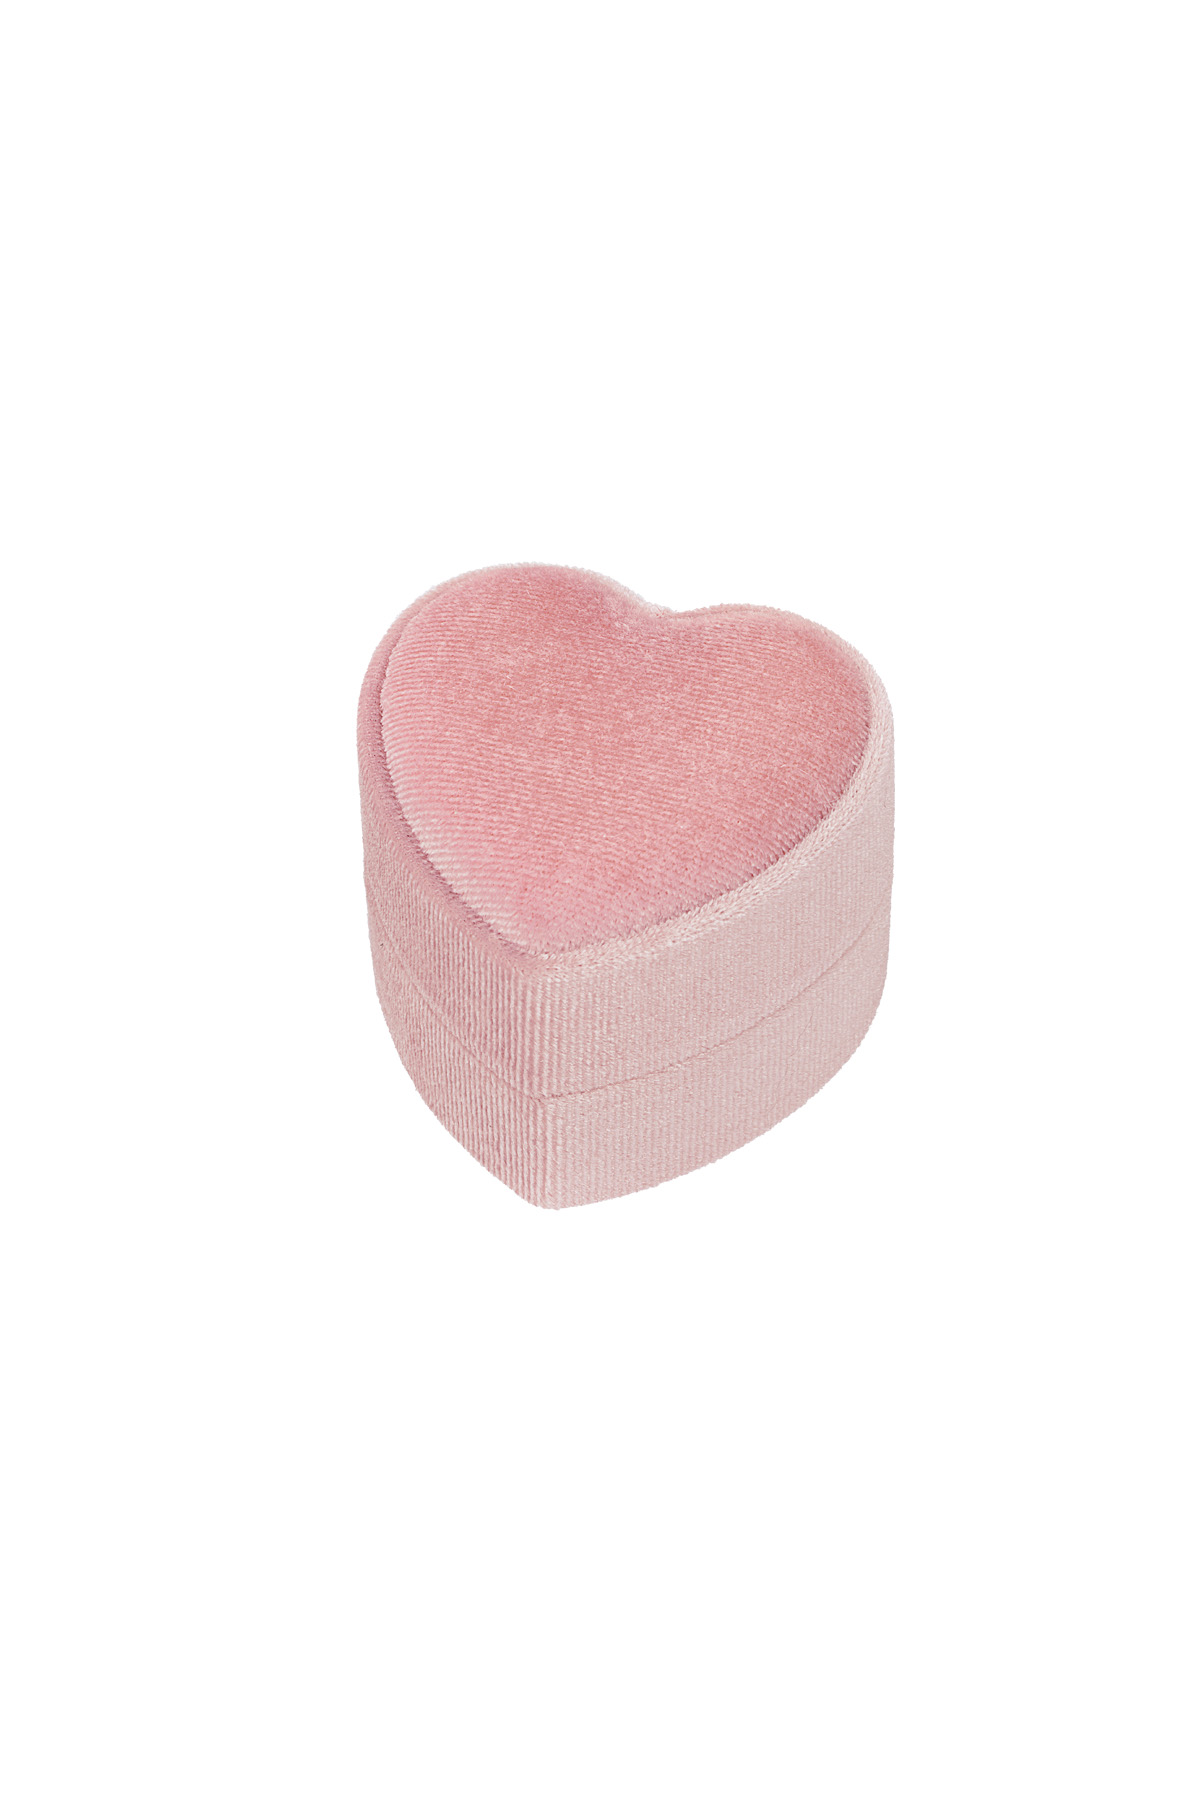 Jewelry box heart velvet - pink 